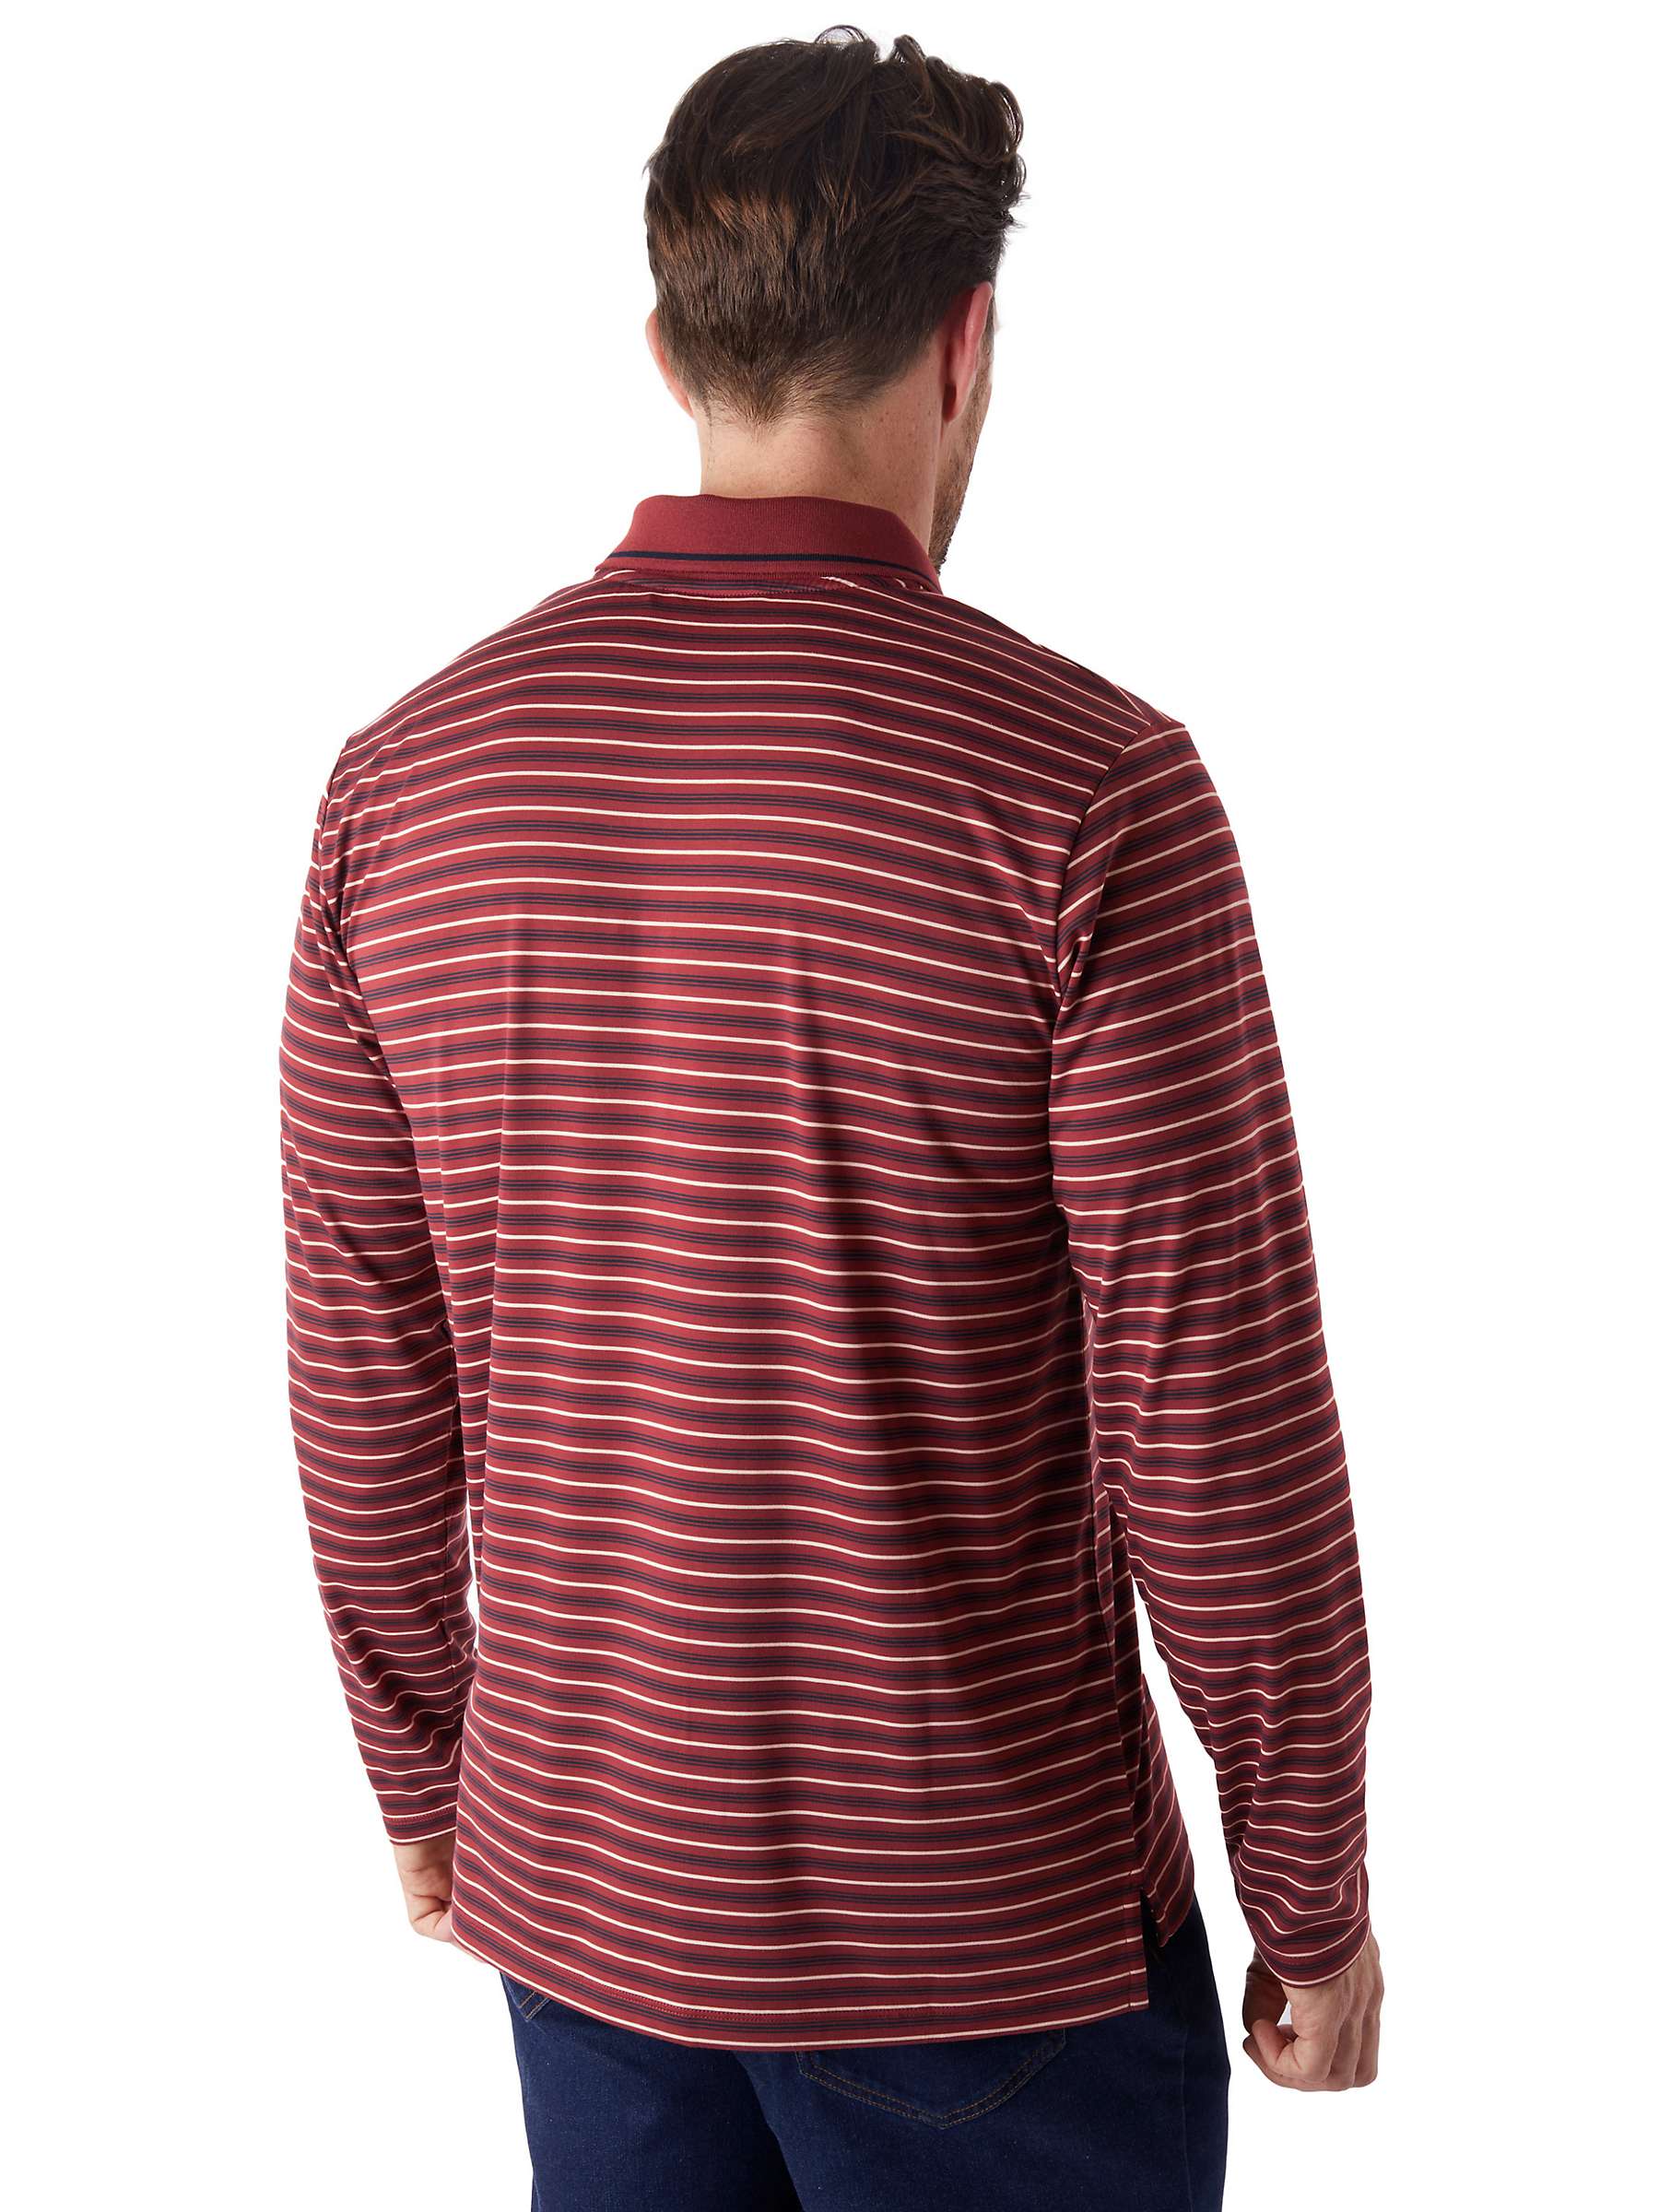 Buy Rohan Shoreline Long Sleeve Stripe Polo Shirt Online at johnlewis.com